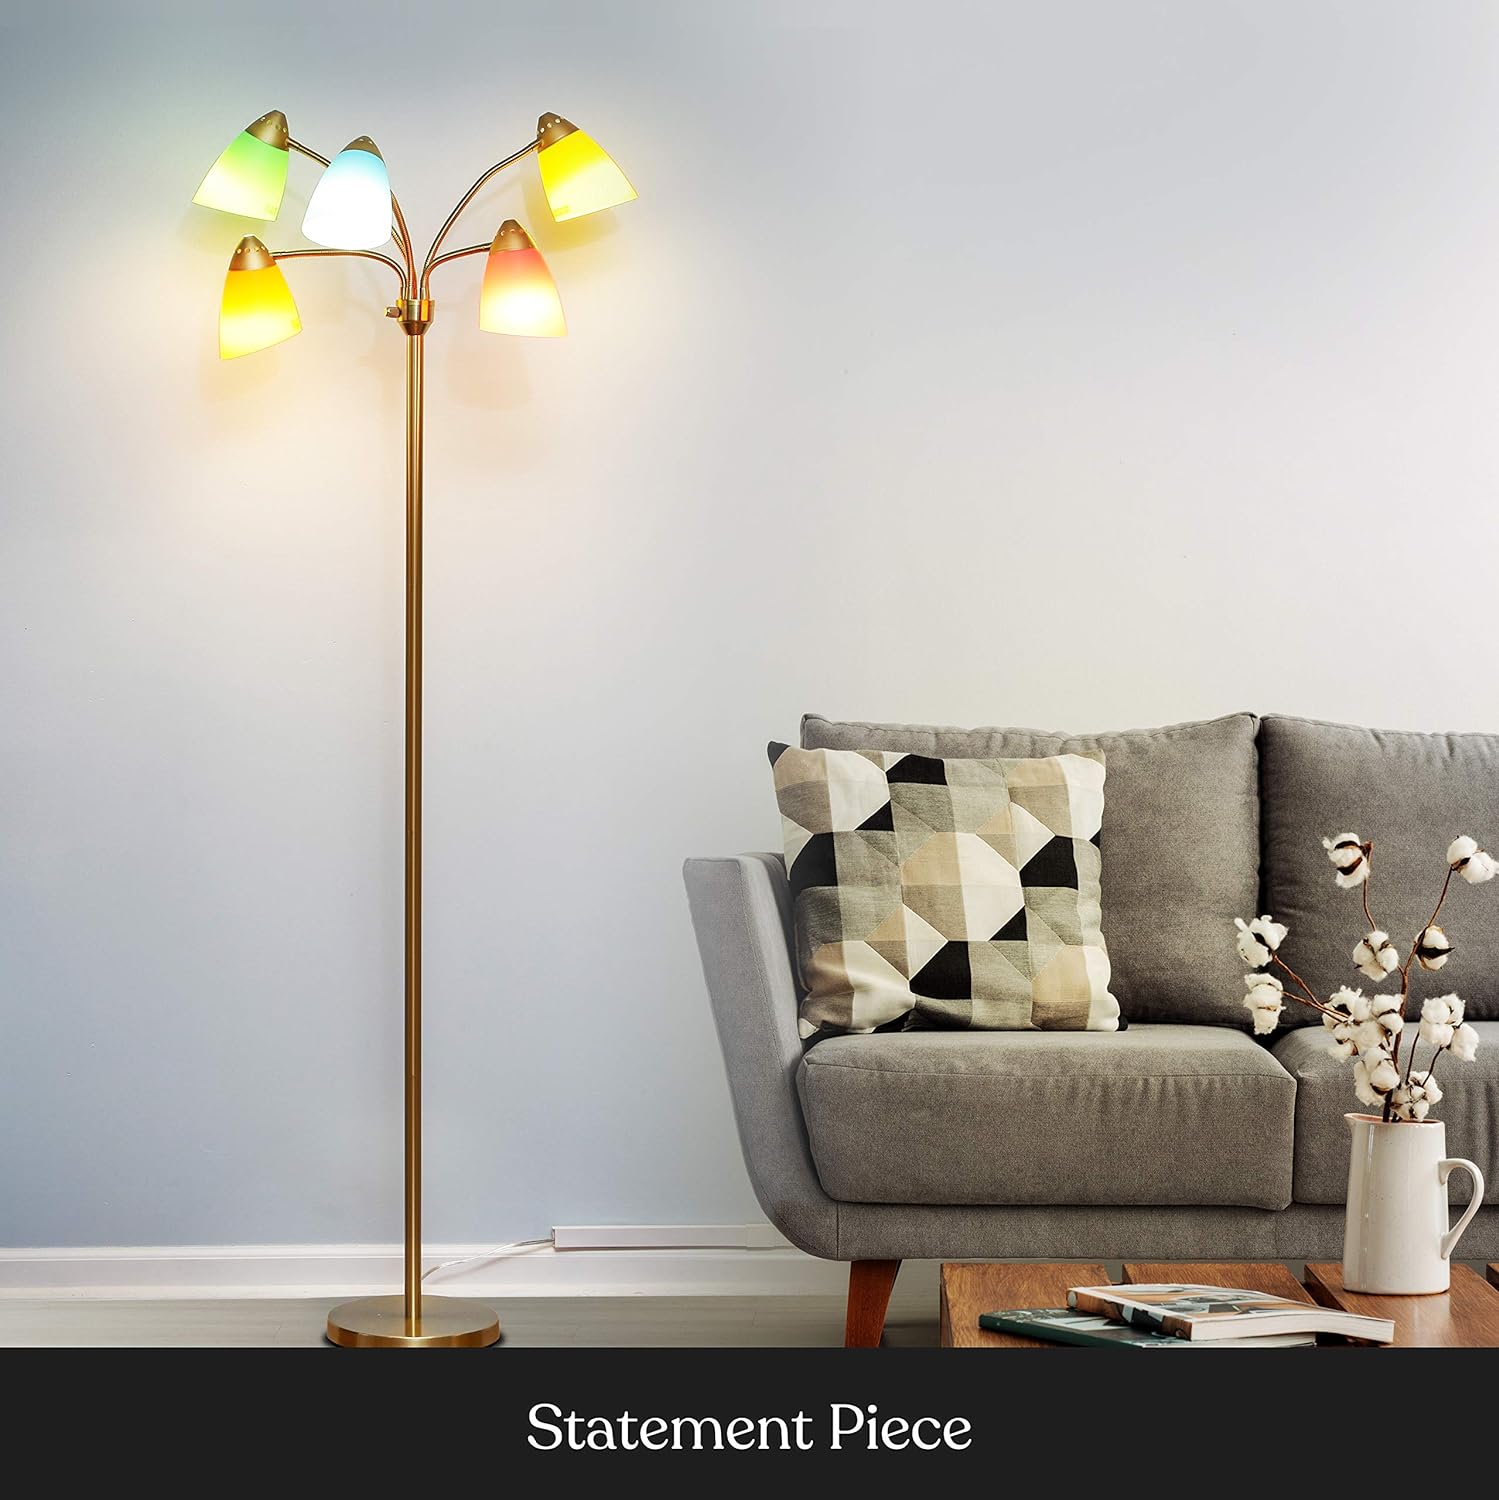 Brightech Medusa LED Floor Lamp - Multi Head Adjustable Tall Pole Standing Reading Lamp for Living Room, Bedroom, Kids Room - Includes LE